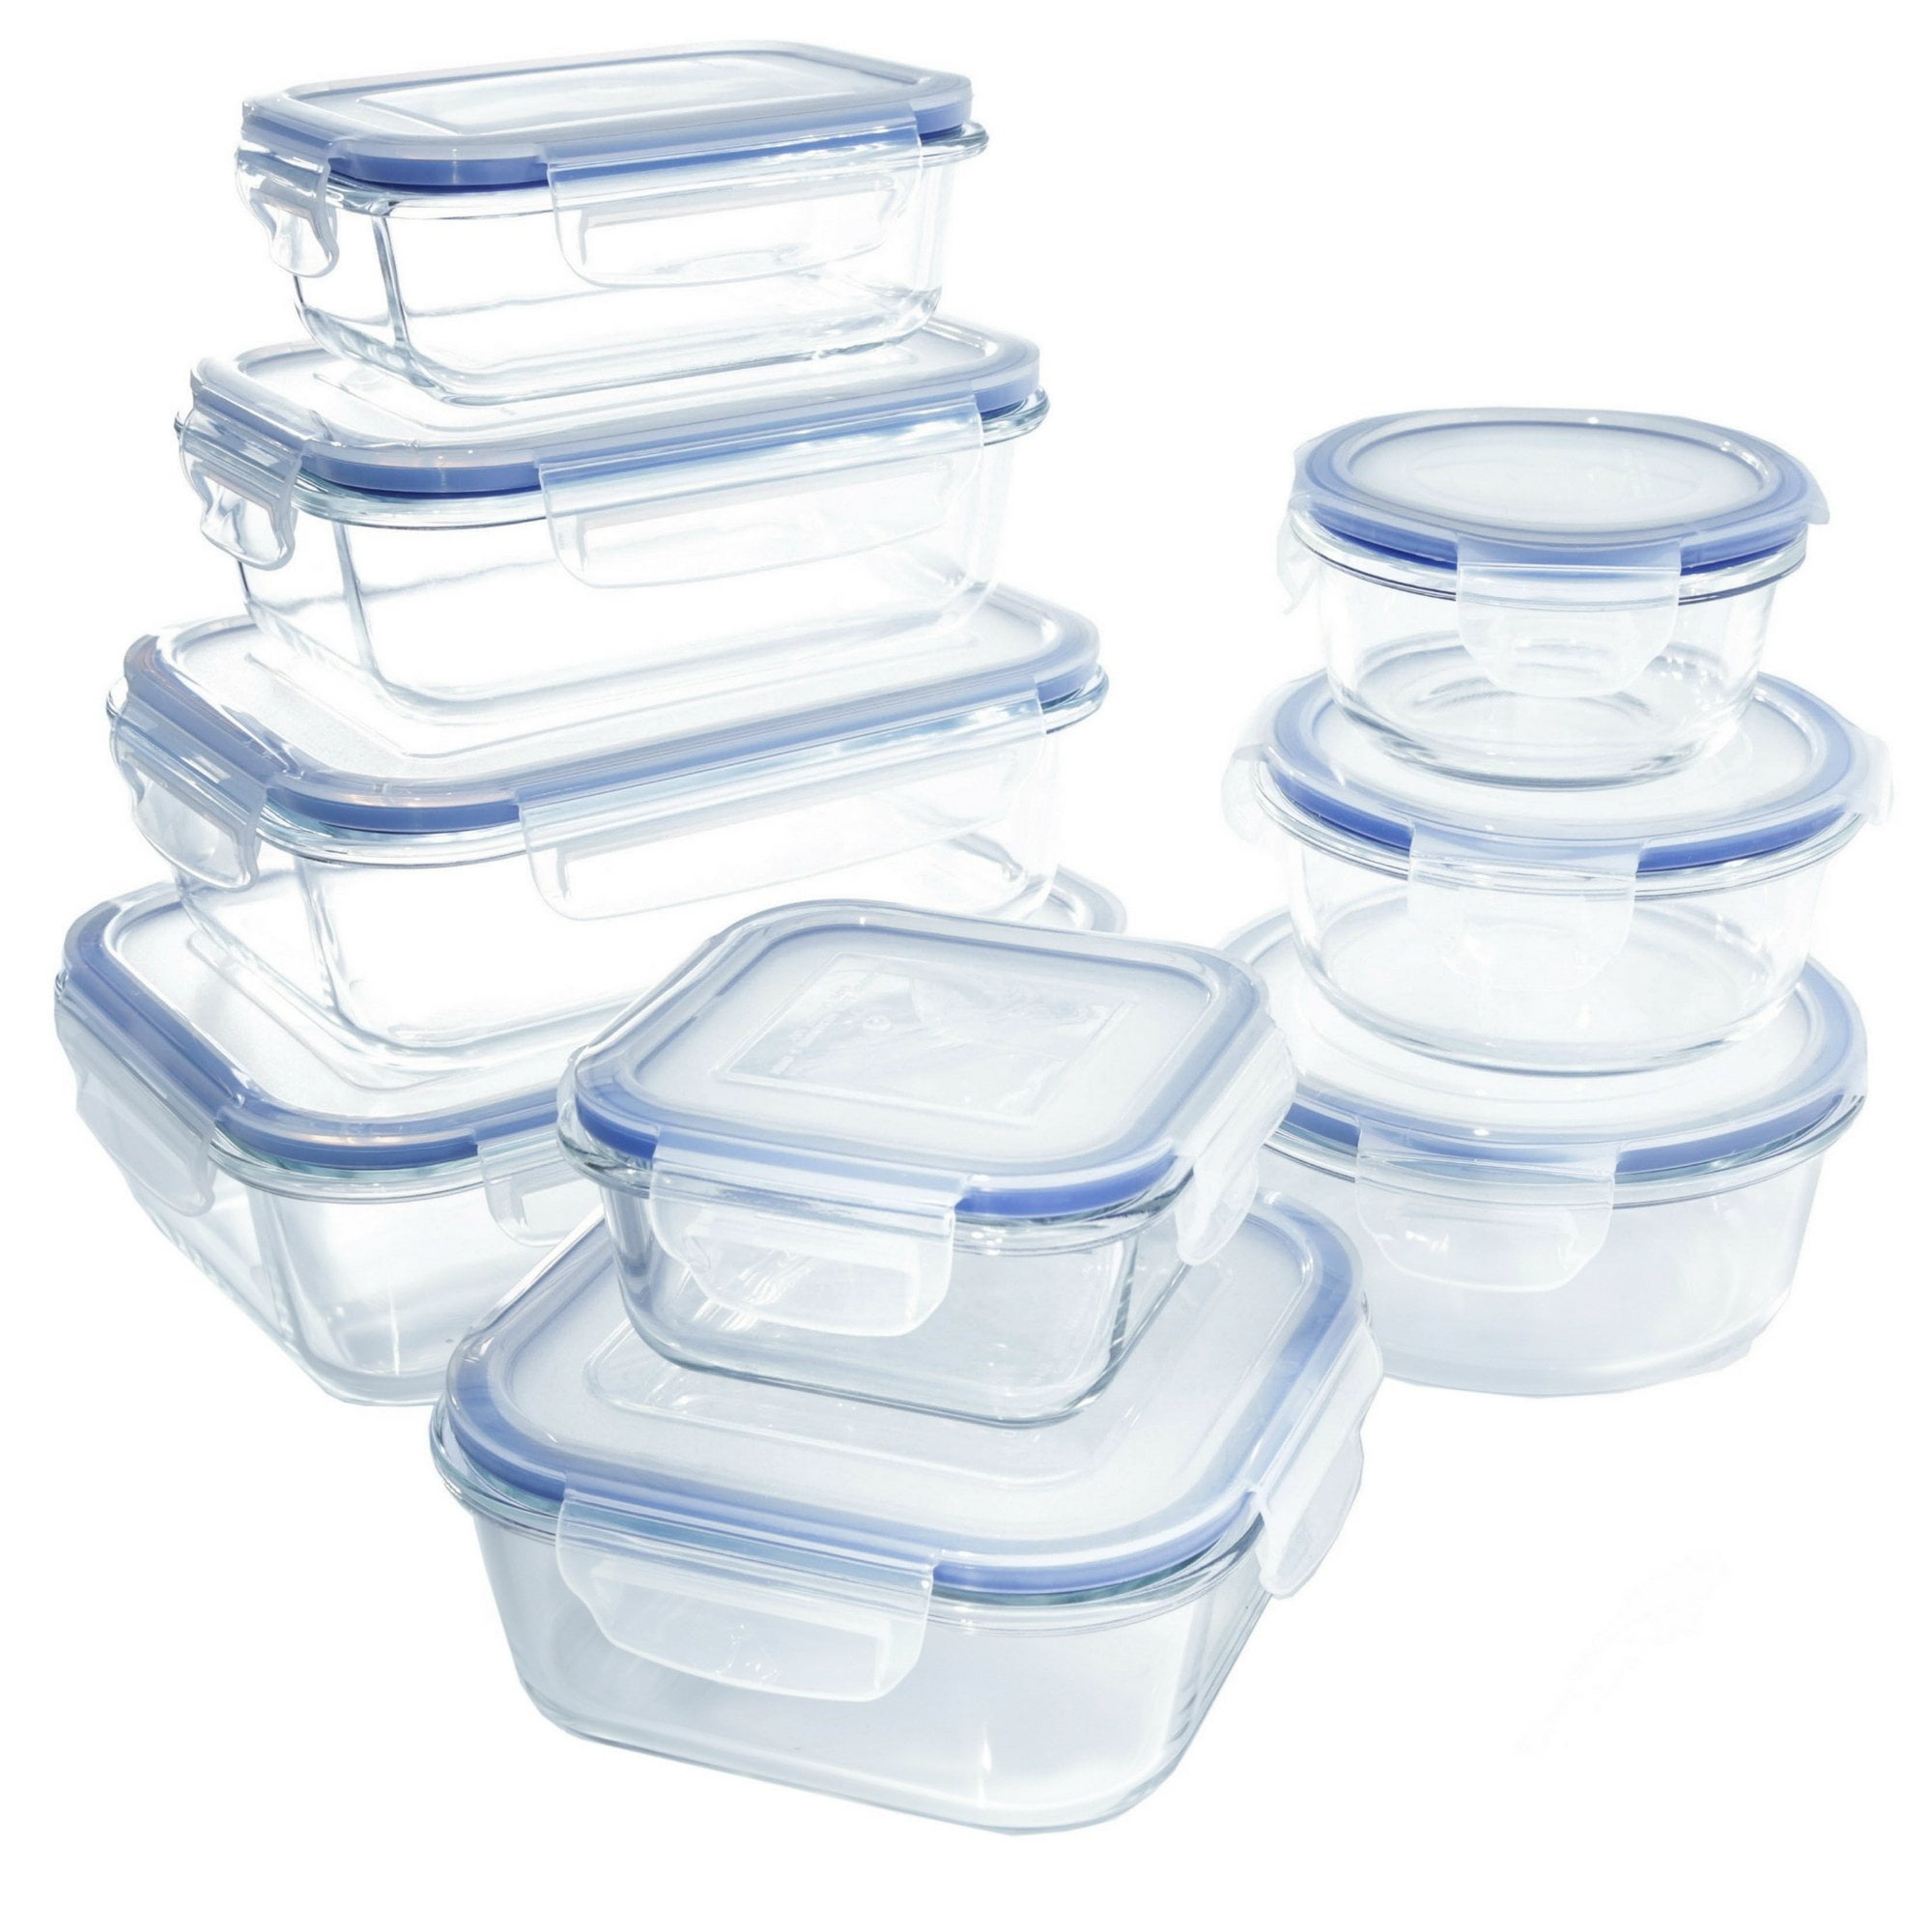 Snapware 38 pc Plastic Food Storage Set 19 Containers w/ Lids Microwave Safe b 